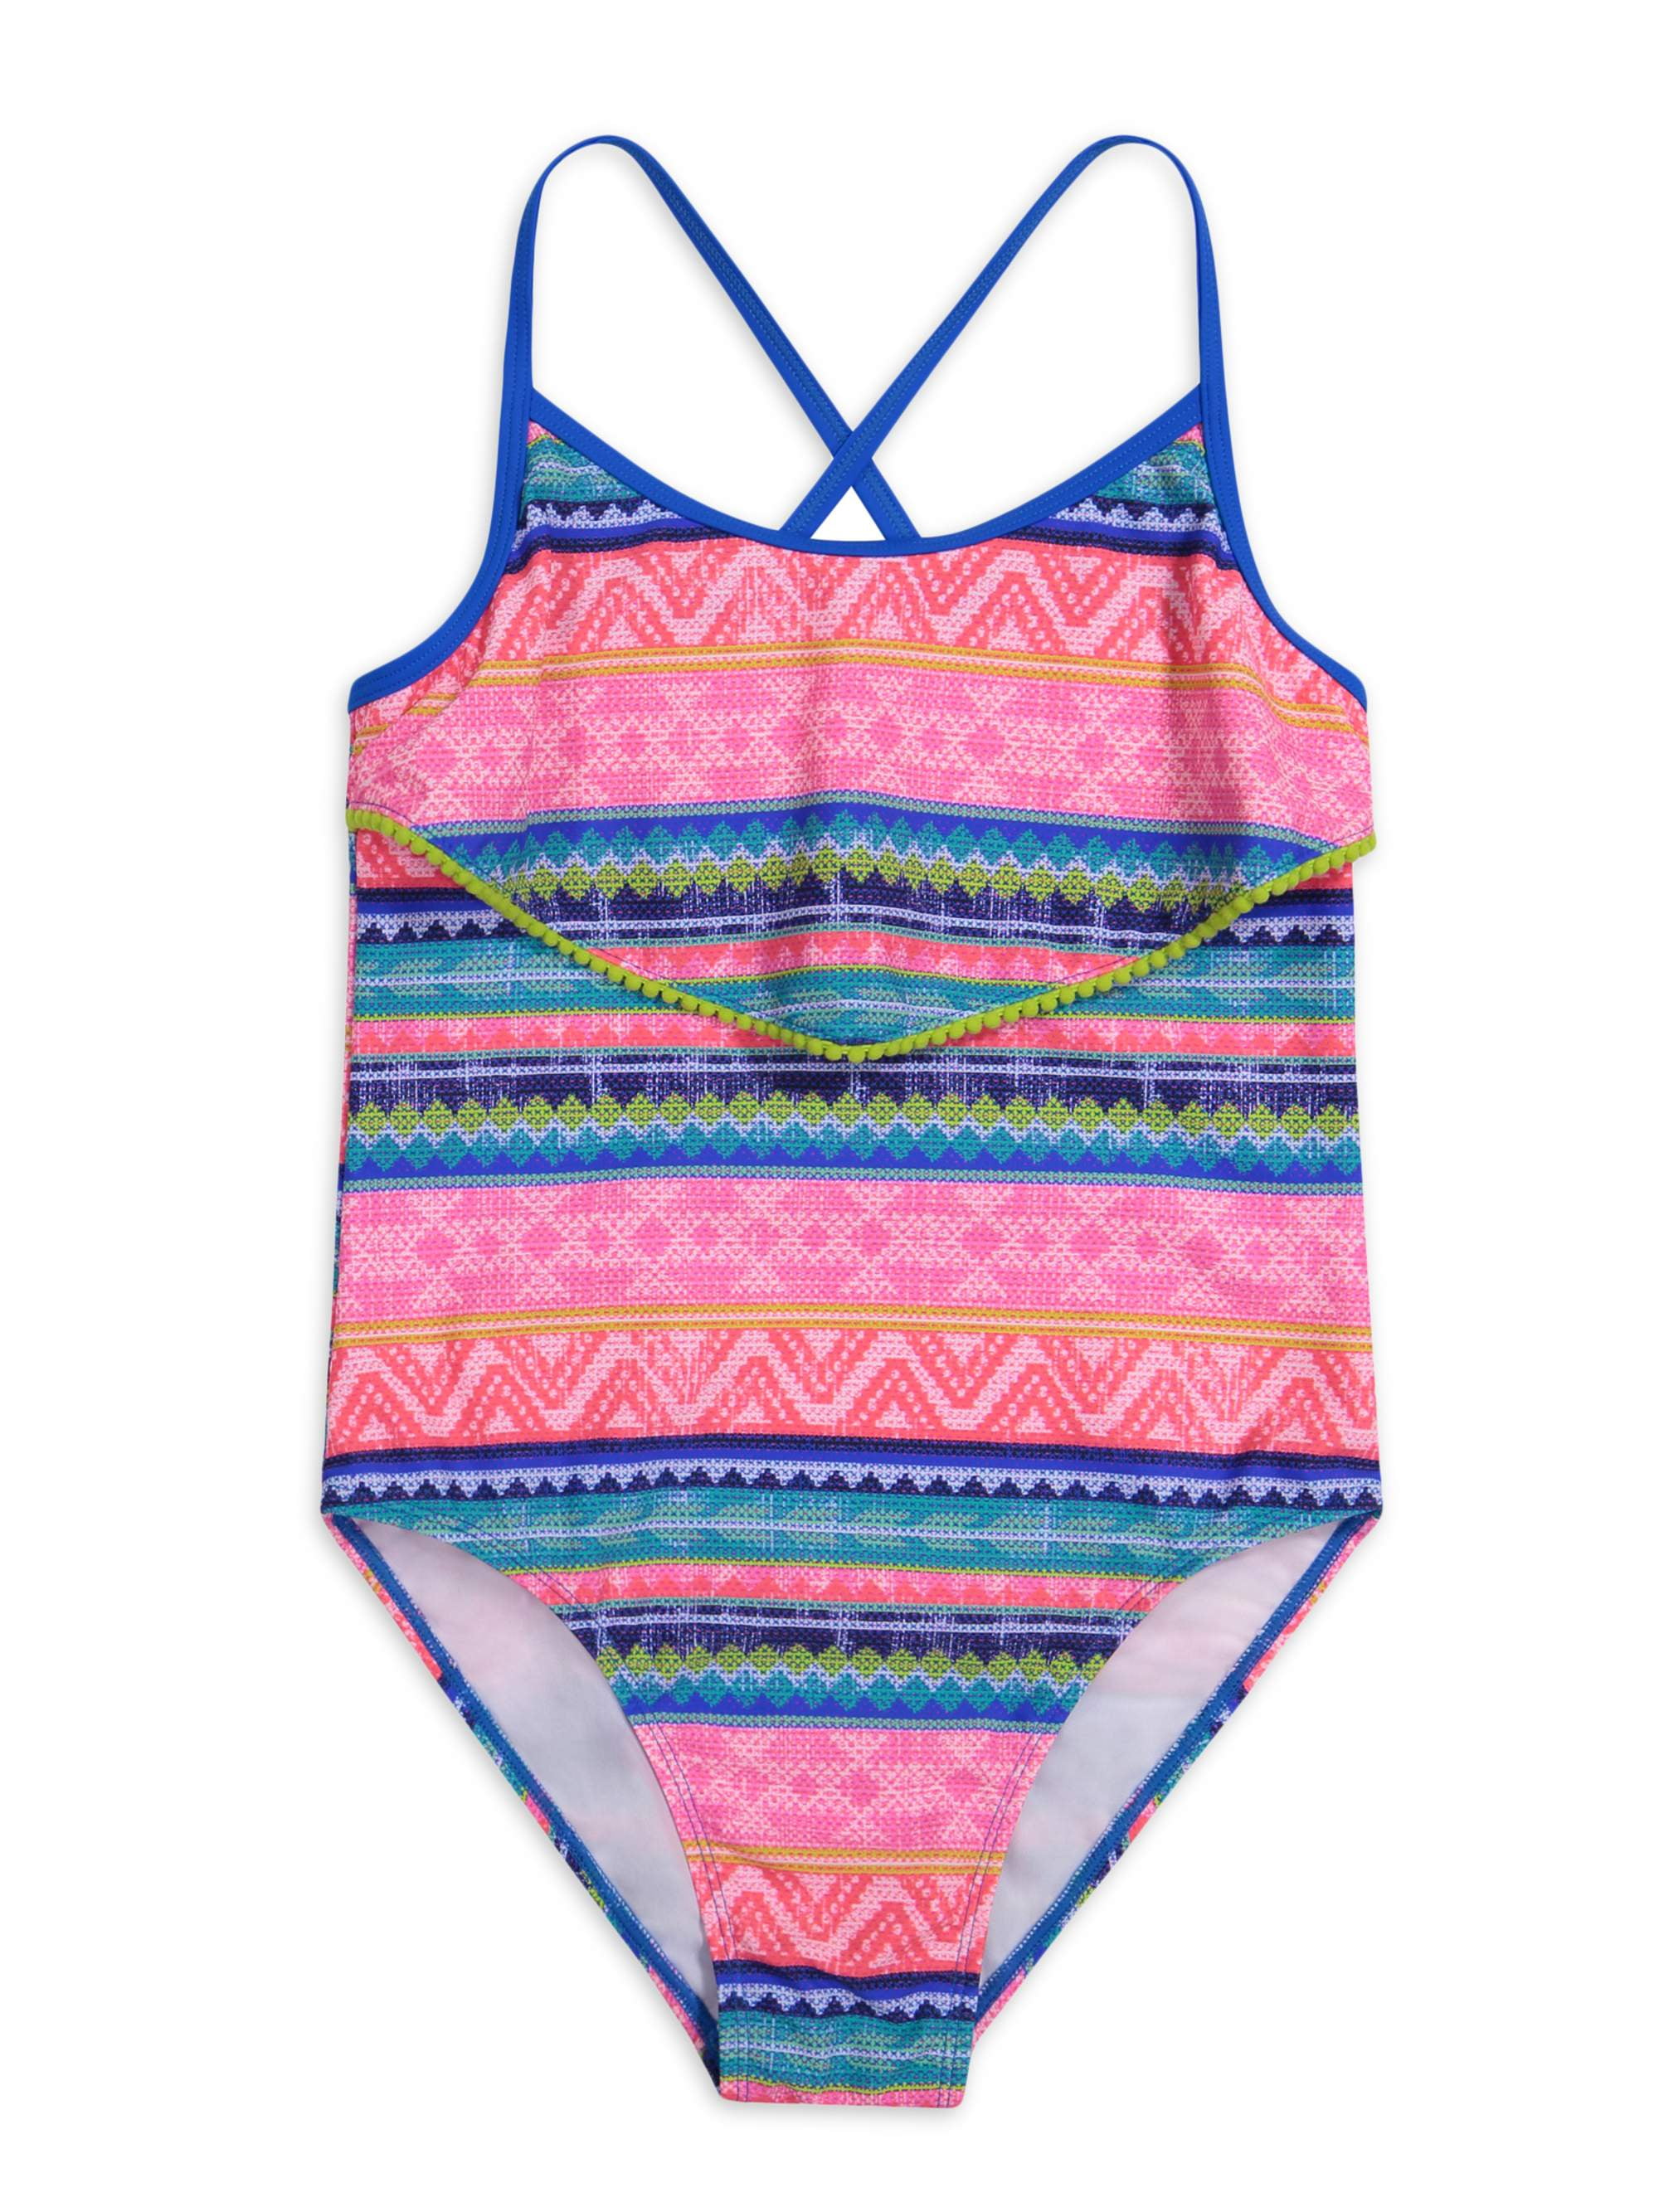 Size 4T *NEW* Tommy Bahama Girls' 2-Piece Bikini Swimsuit Bathing Suit 